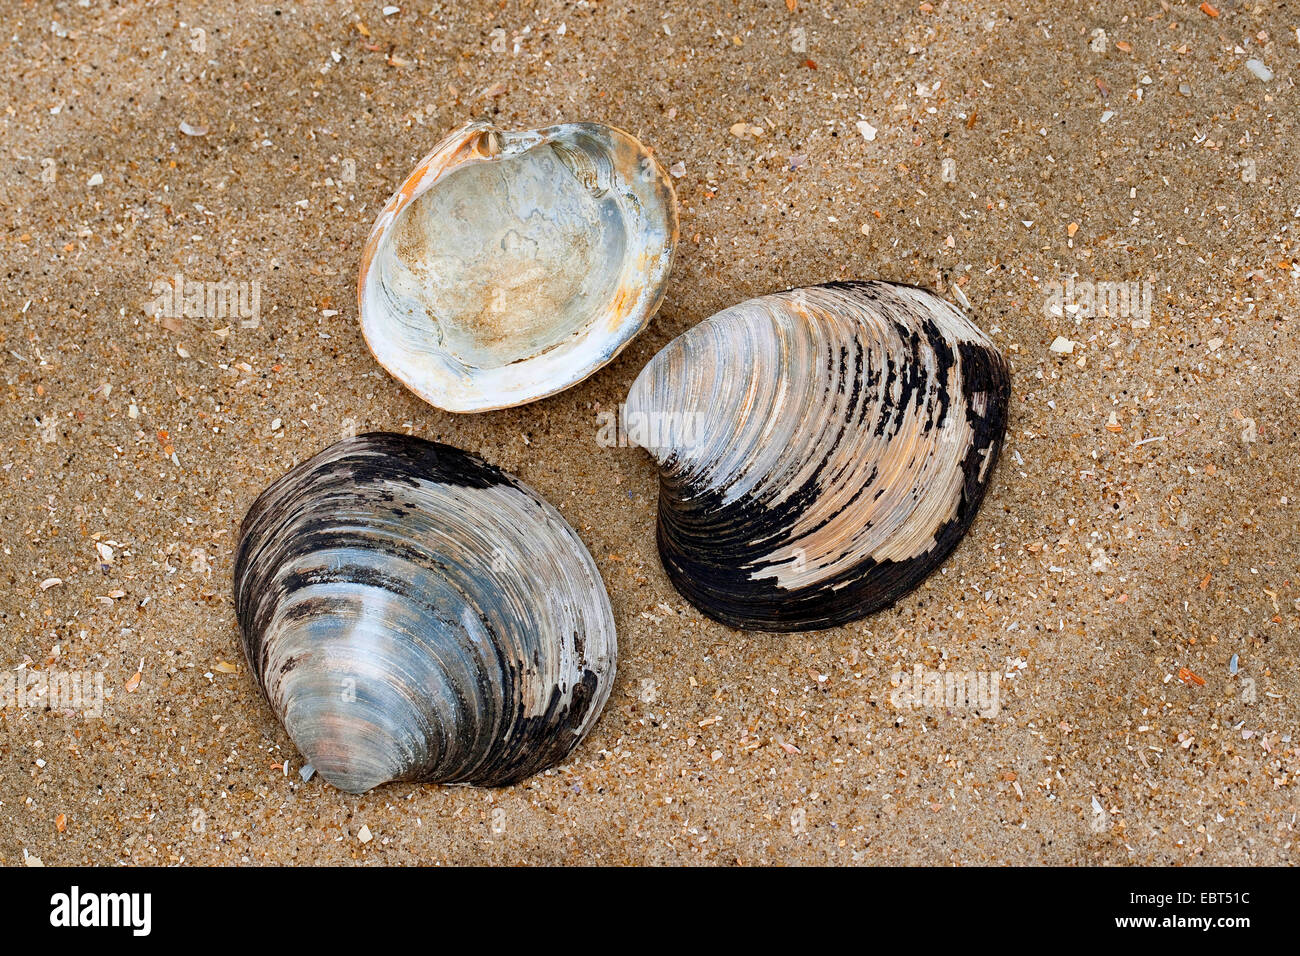 ocean quahog, Icelandic cyprine, mahogany clam, mahogany quahog, black quahog, black clam (Arctica islandica, Cyprina islandica), shells on the beach, Germany Stock Photo